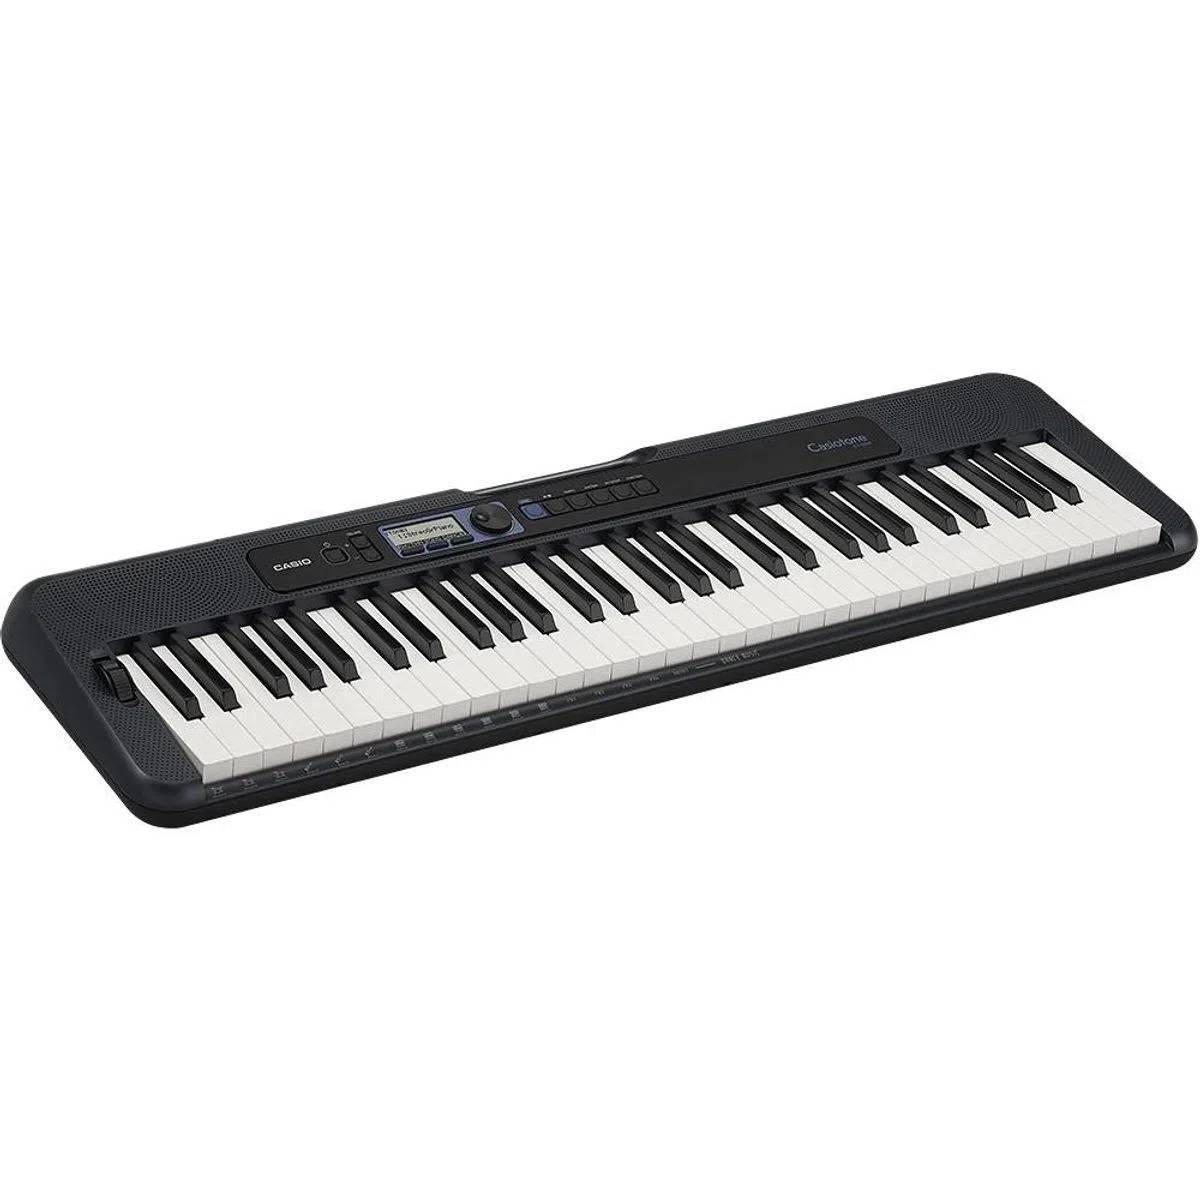 teclado-ct-s300-casio-1